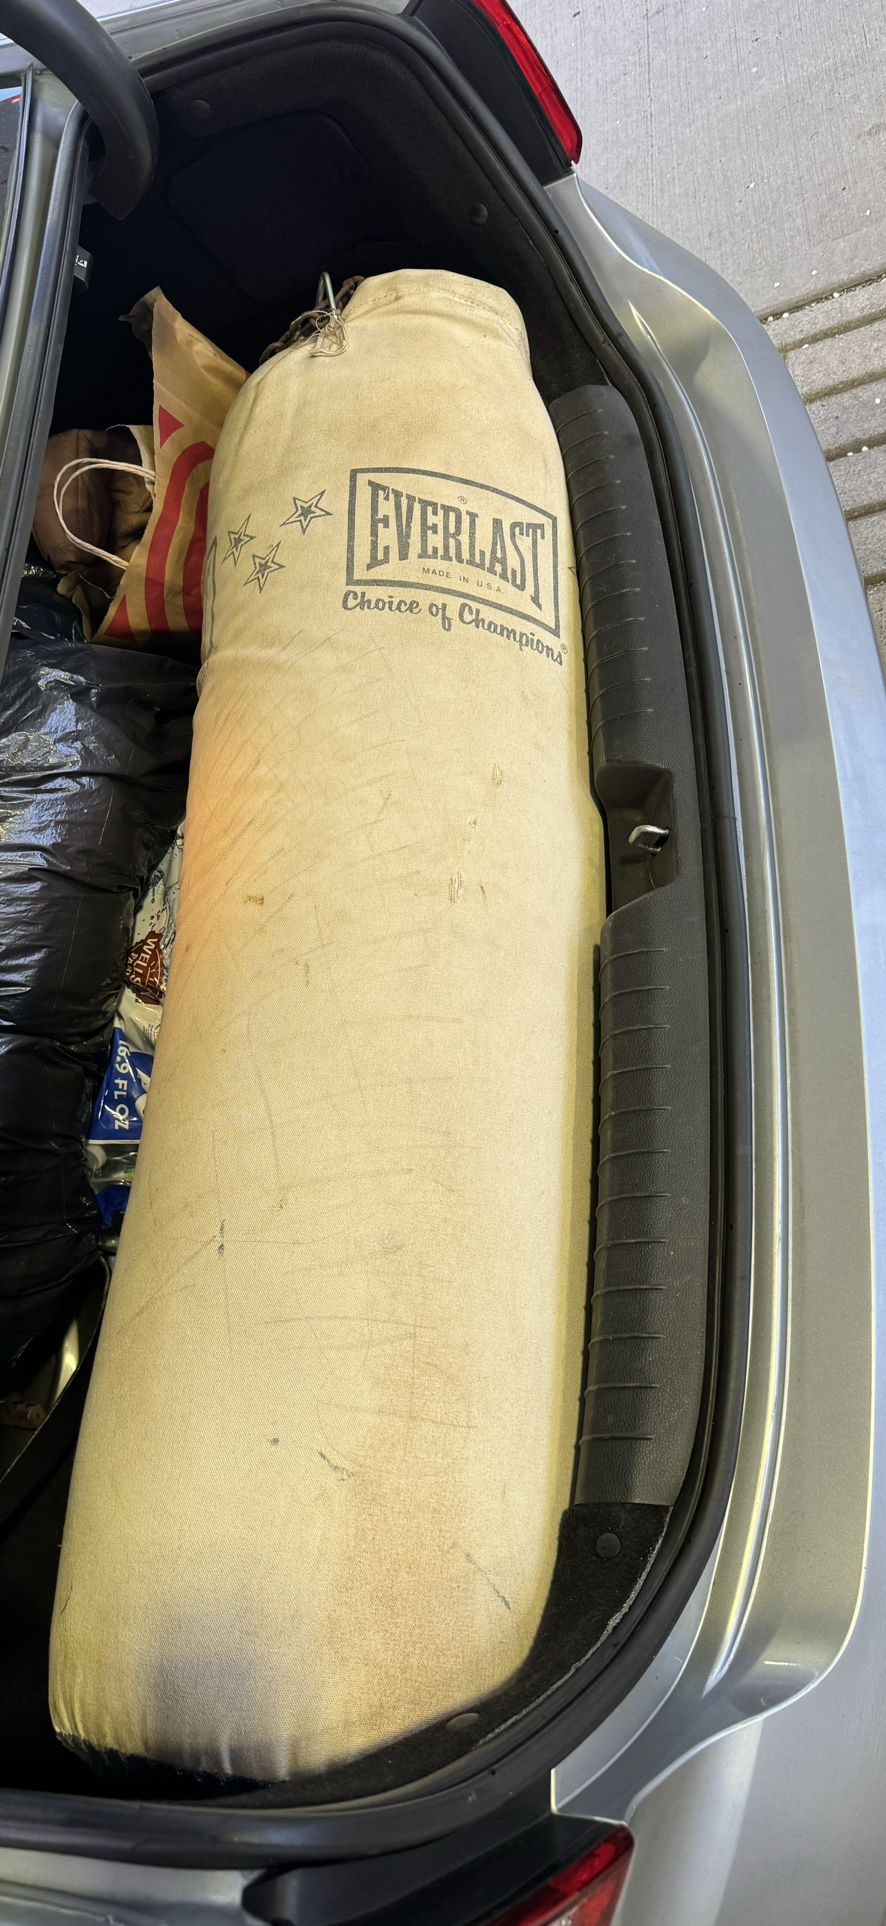 Everlast Used Punching Bag 70lbs